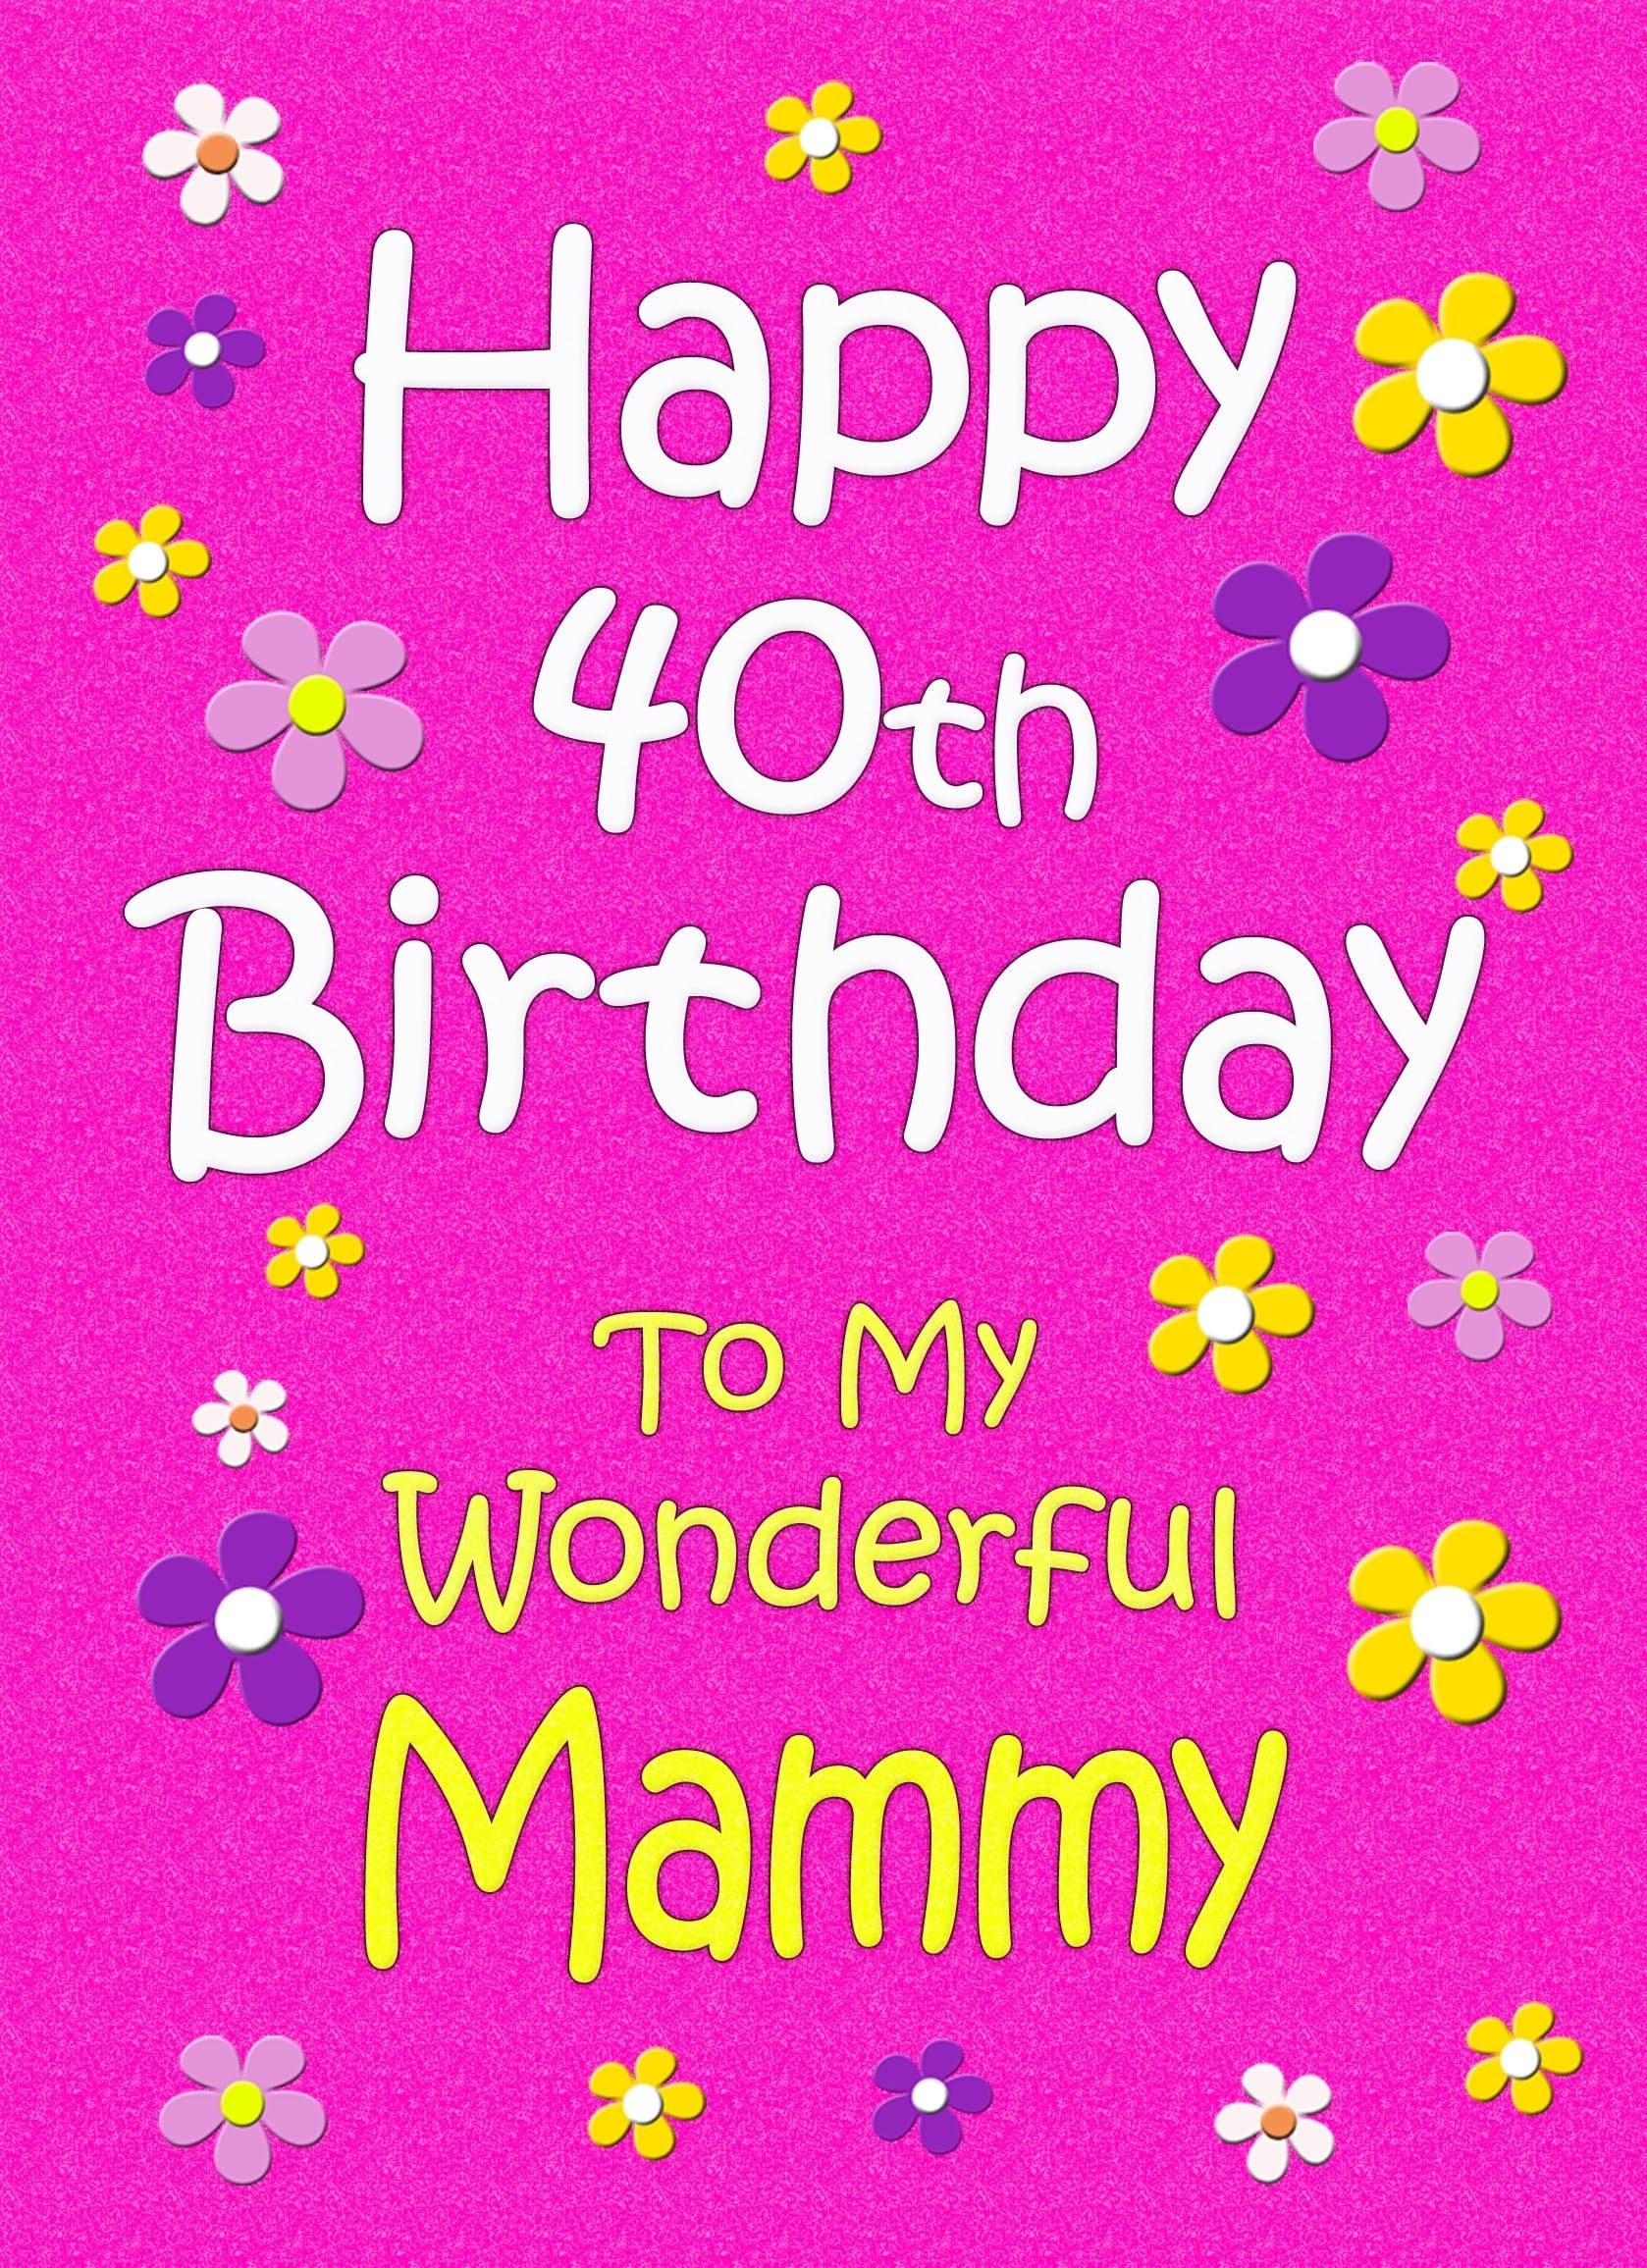 Mammy 40th Birthday Card (Pink)